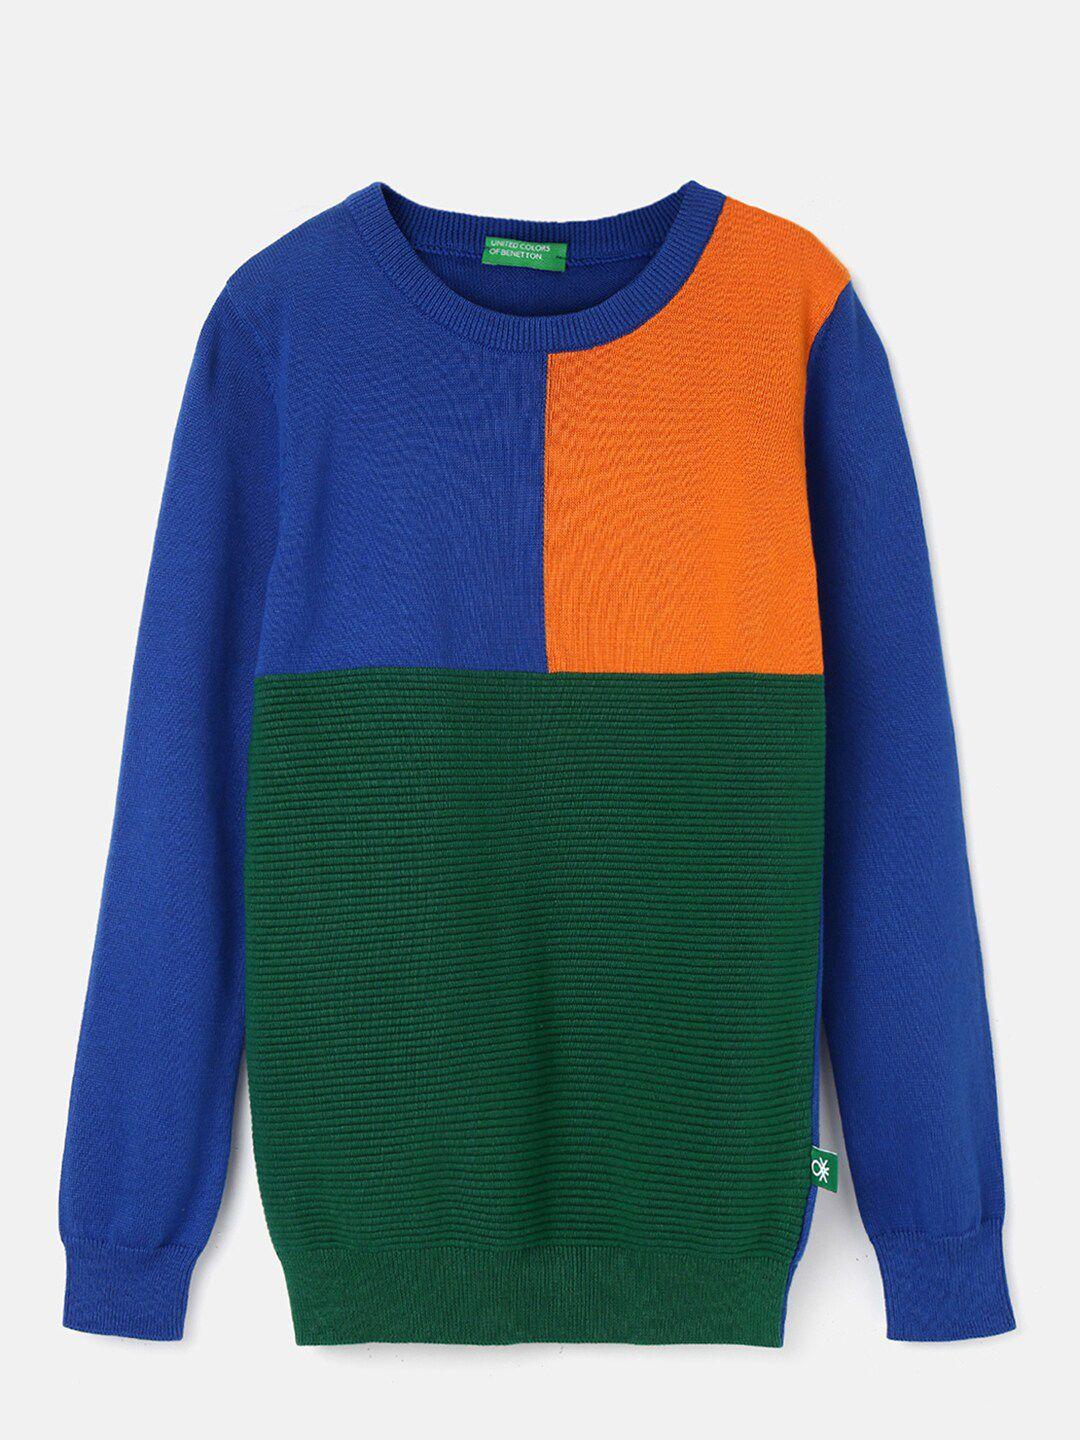 united-colors-of-benetton-boys-colourblocked-cotton-pullover